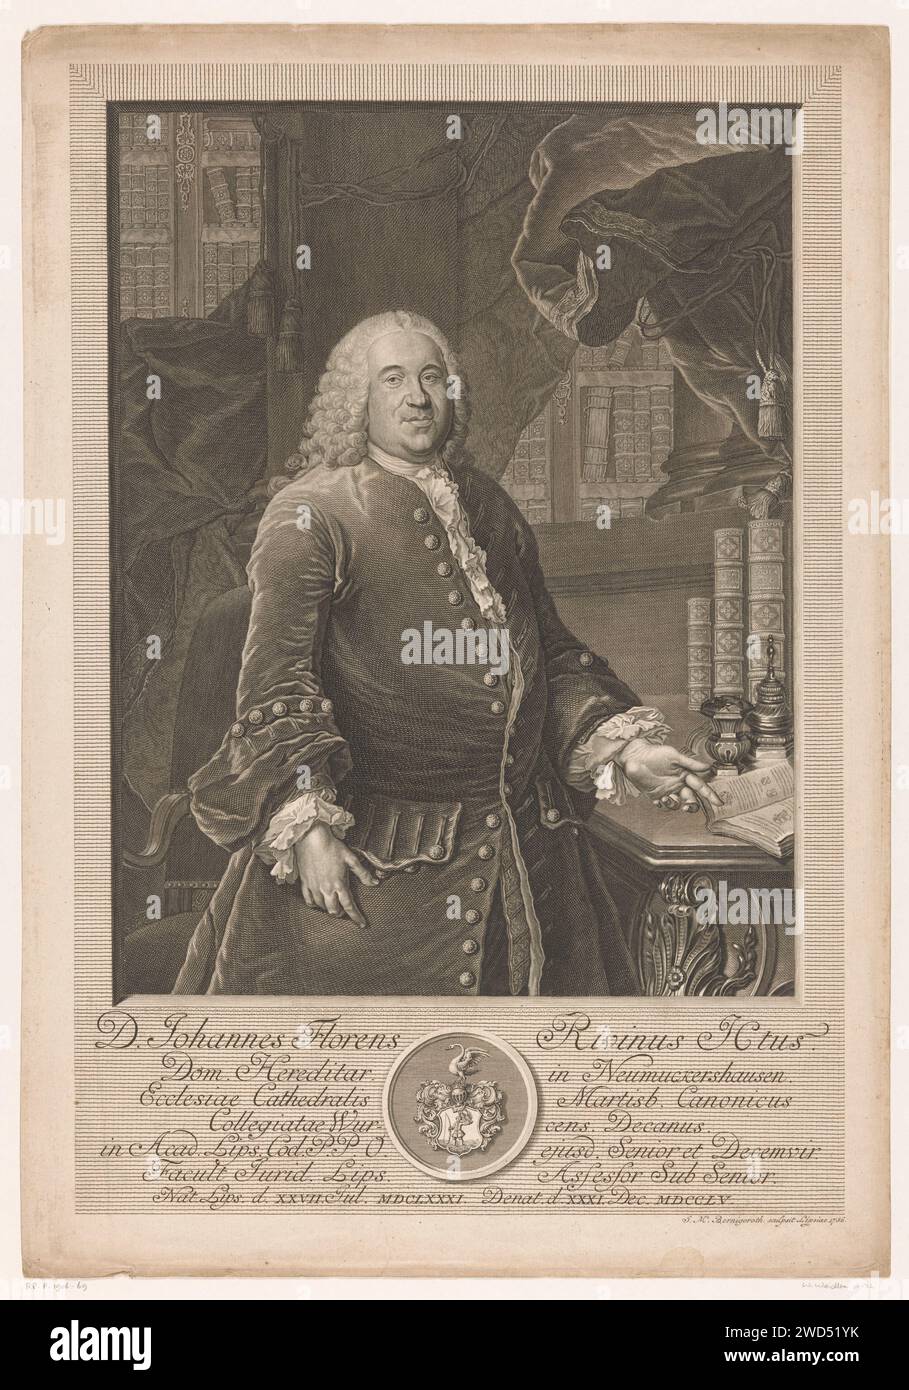 Ritratto van Paulus Grundherr, Johann Friedrich Leonard, 1643 - 1680 stampa Ritratto van Paulus Grundherr, senatore te Neurenberg. incisione su carta Foto Stock